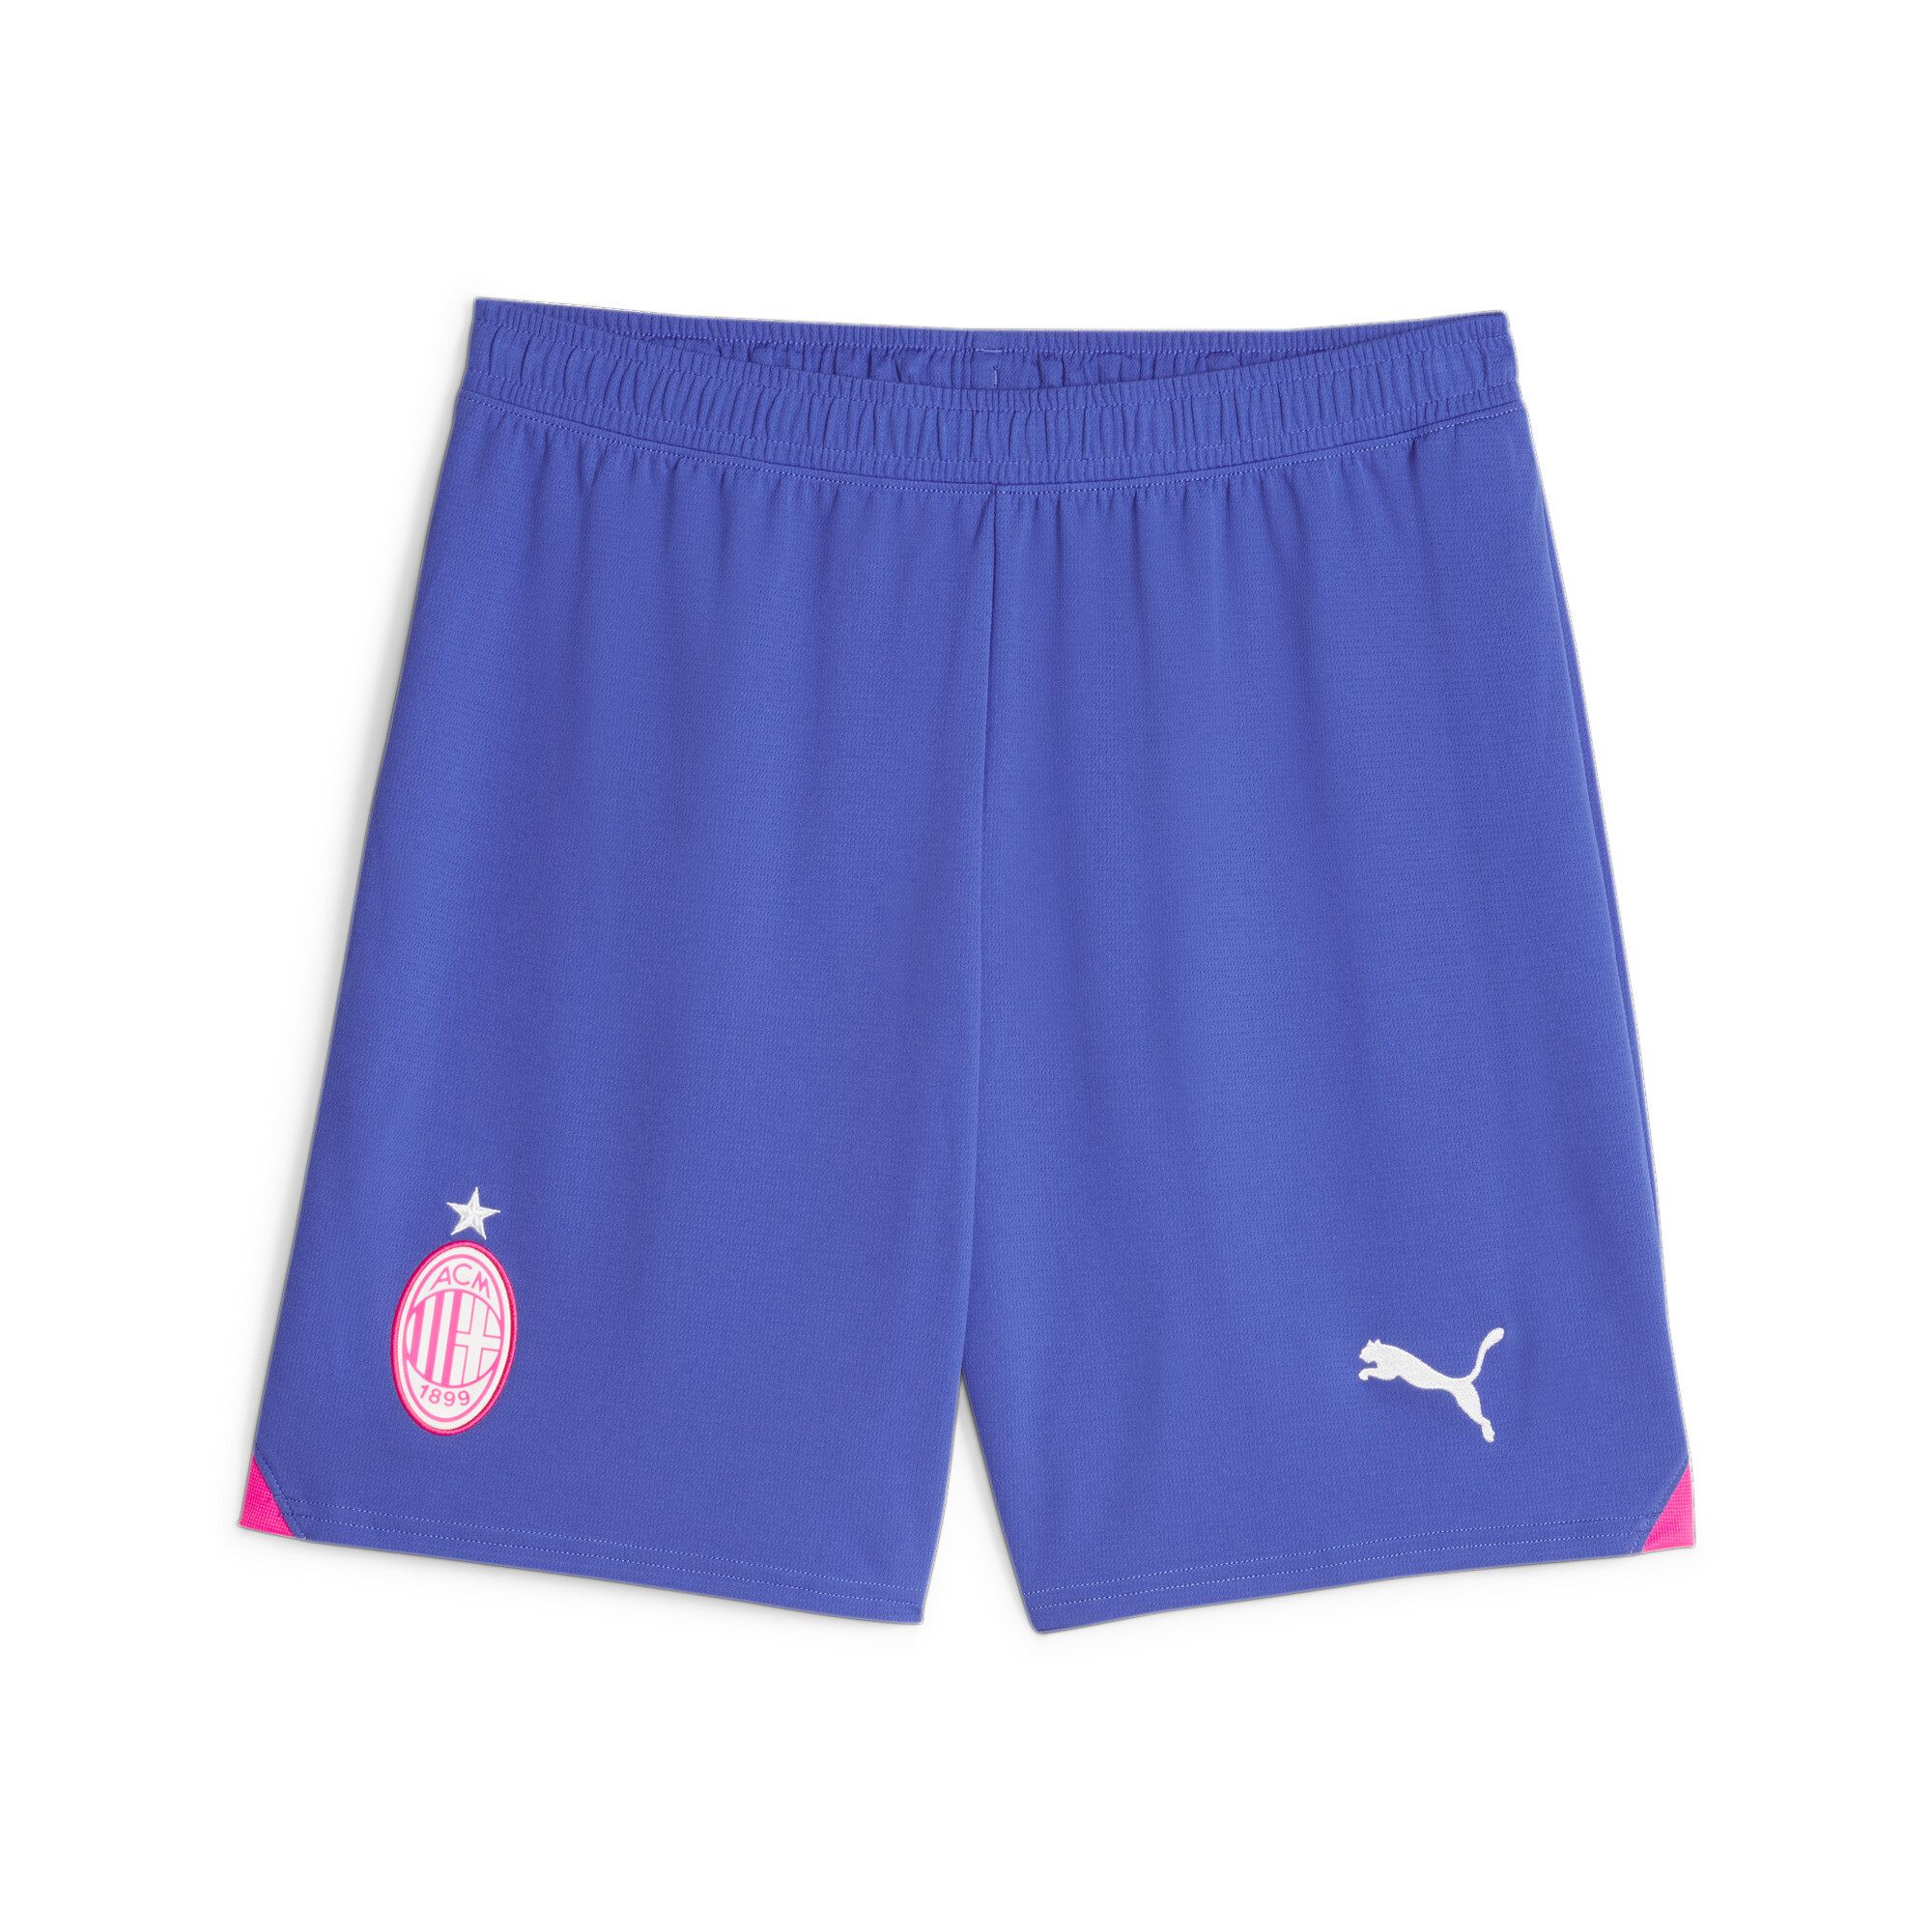 Men's PUMA AC Milan Football Shorts In Blue, Size Small